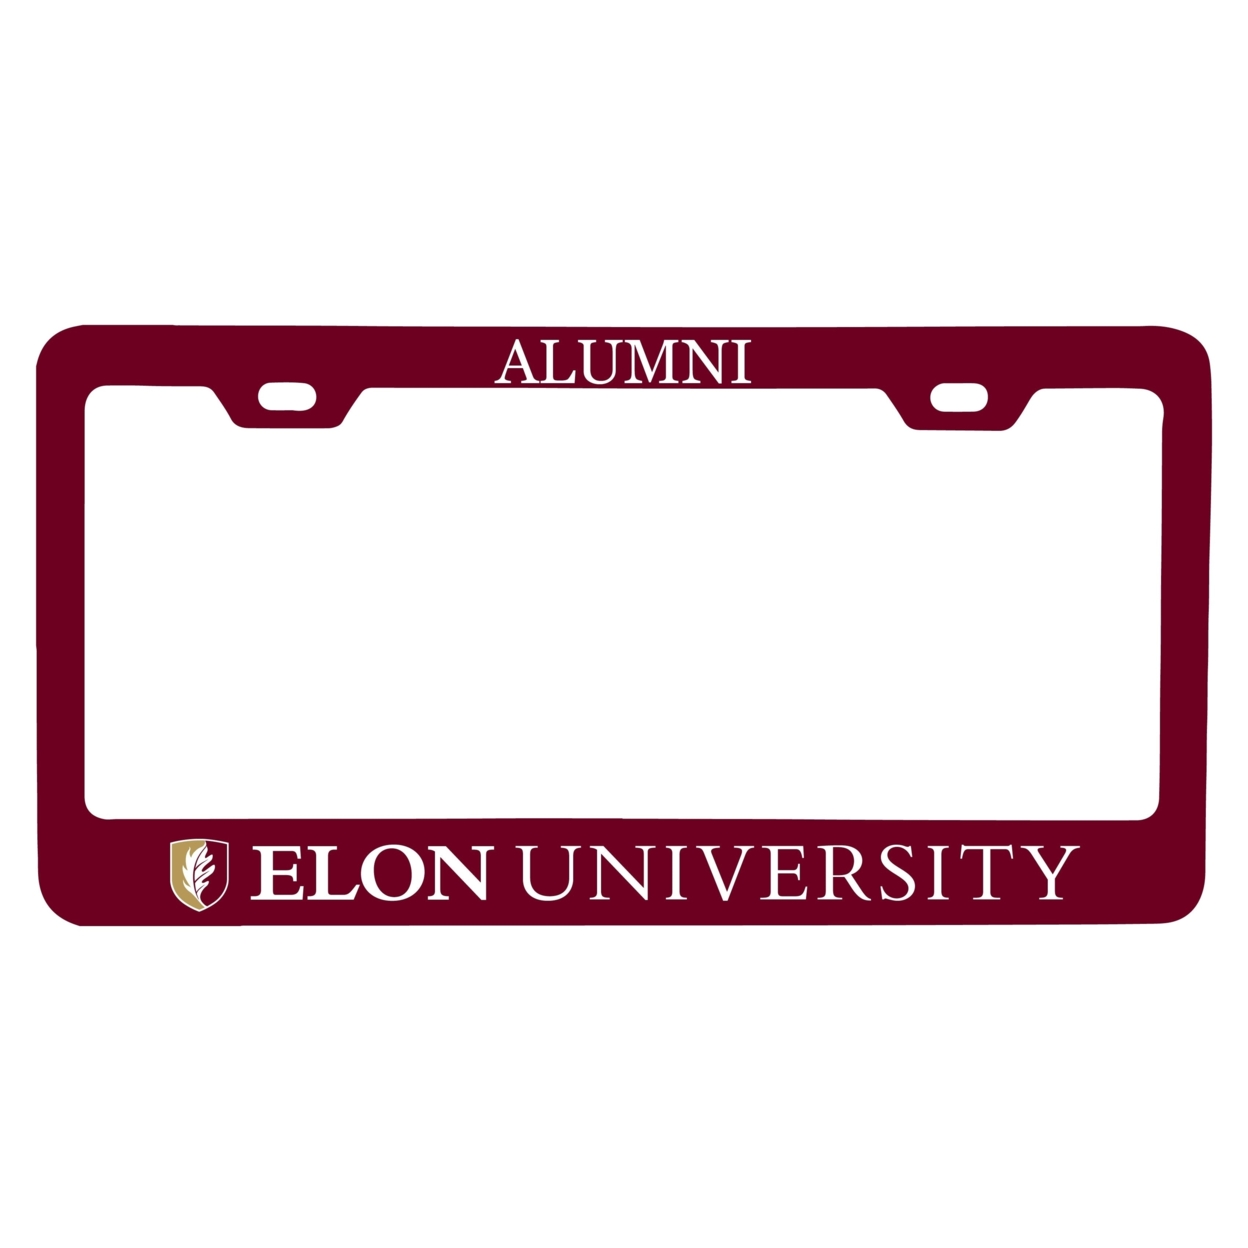 Elon University Alumni License Plate Frame